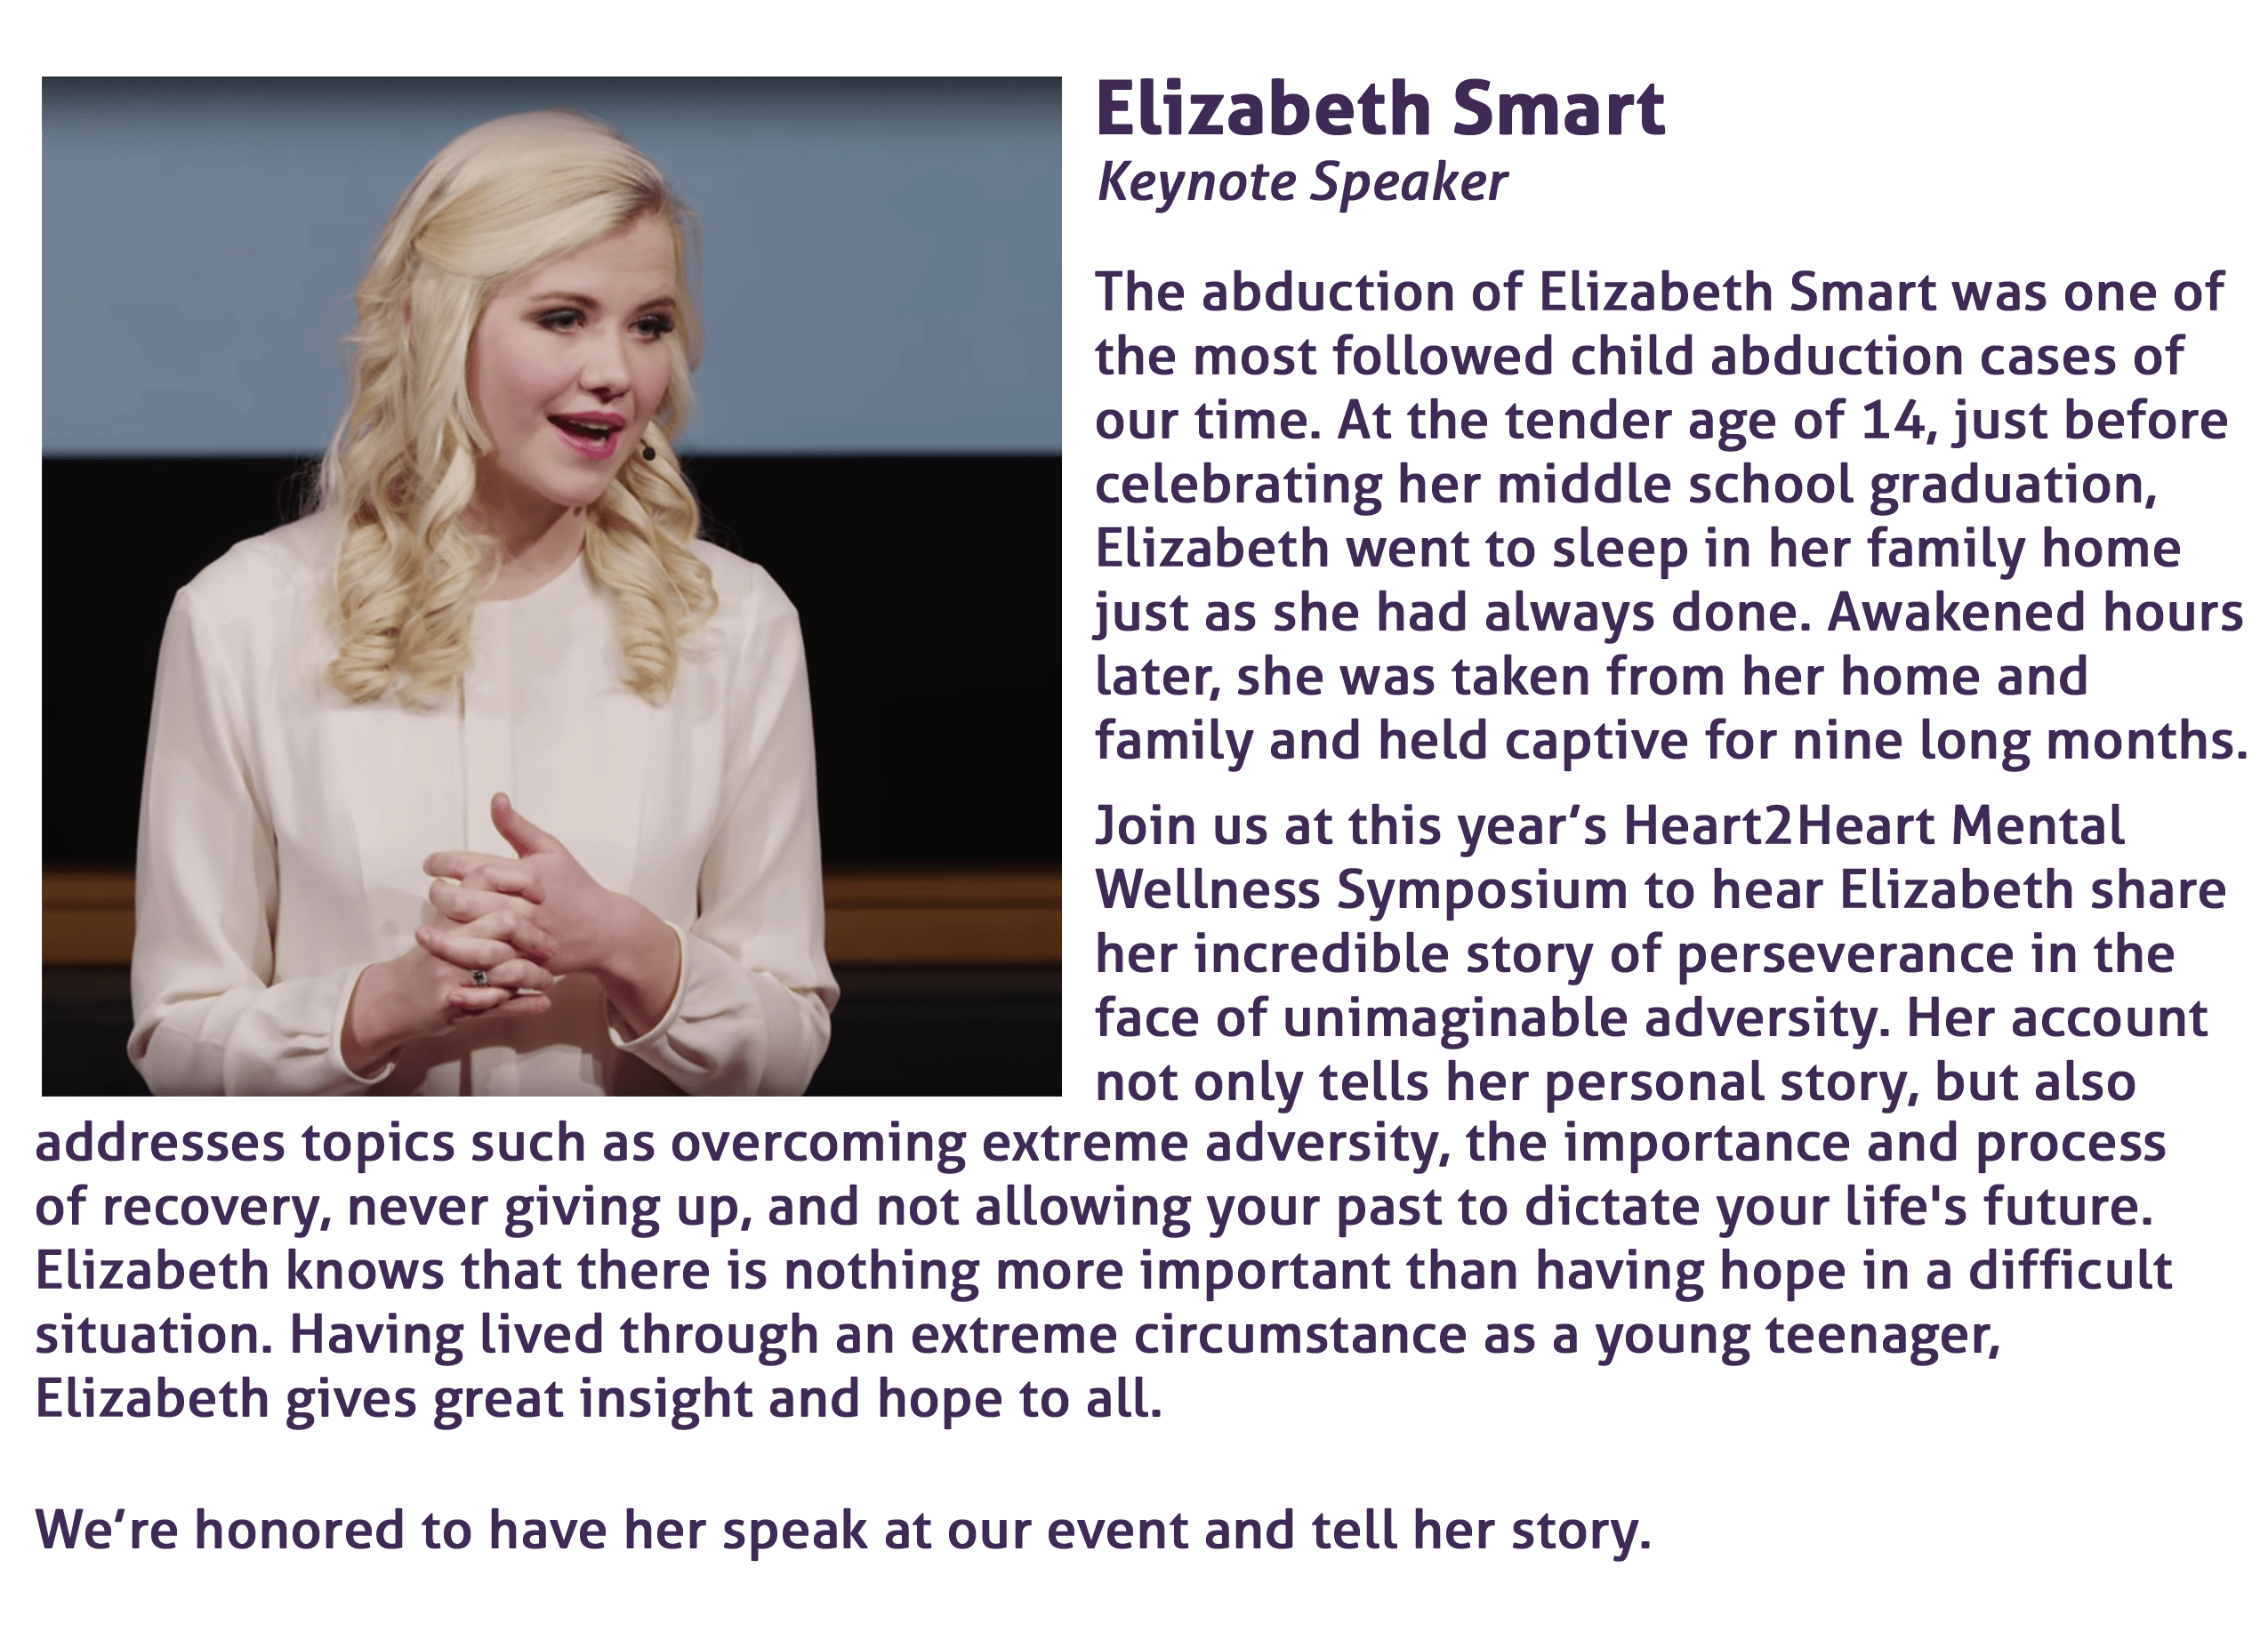 Elizabeth Smart